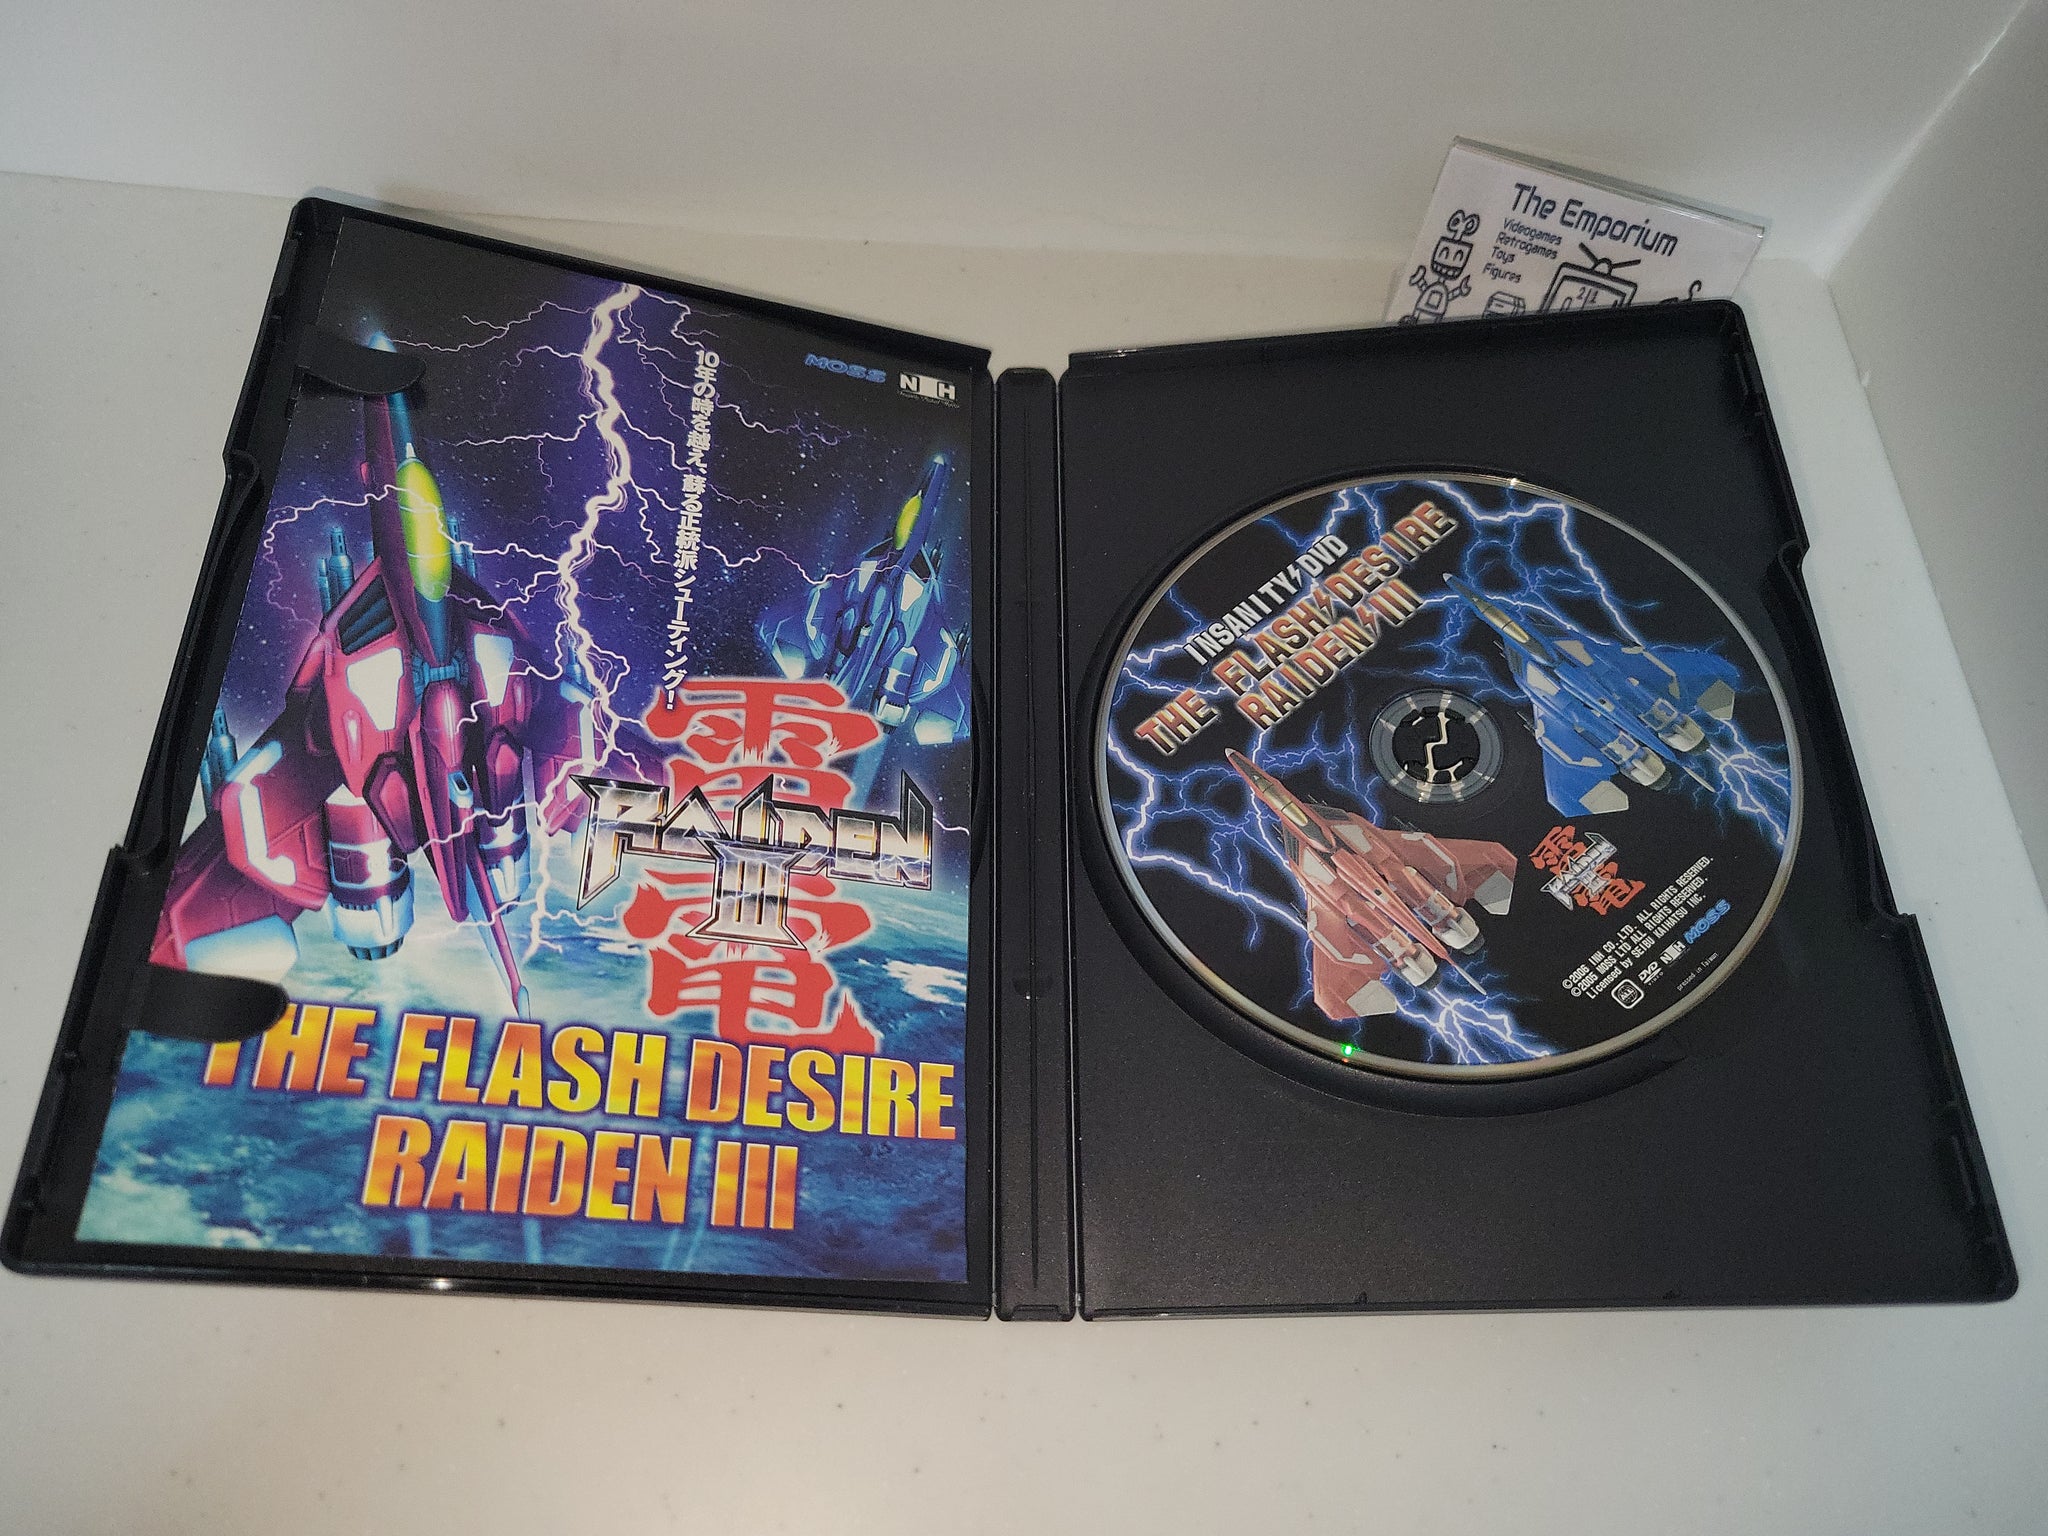 Raiden III The Flash Desire dvd - dvd superplay + soundtrack